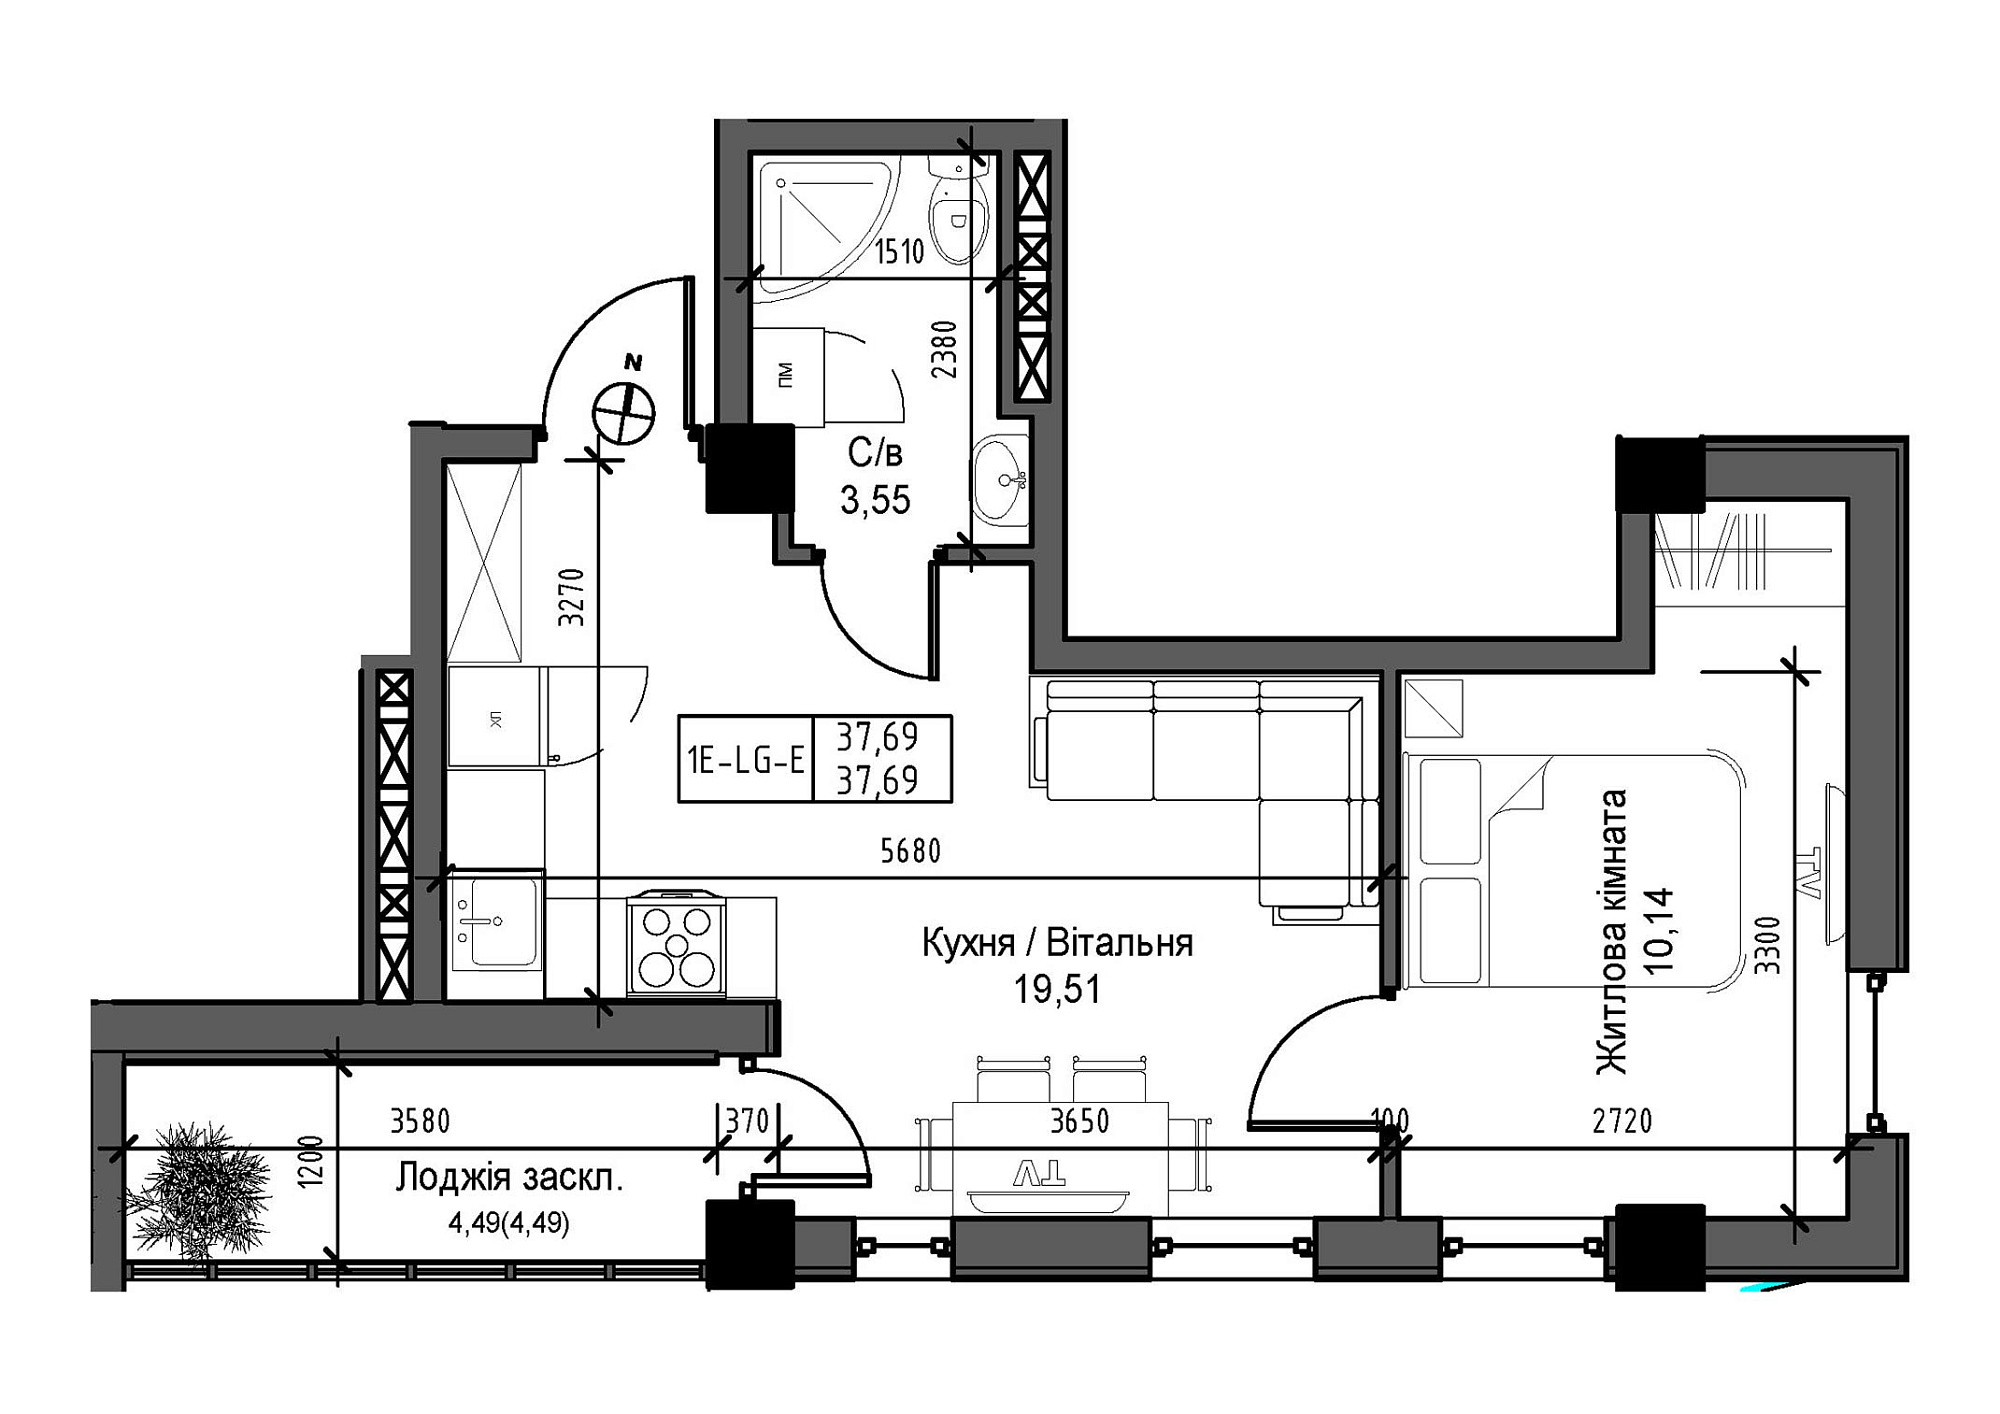 Планування 1-к квартира площею 37.69м2, UM-007-03/0009.